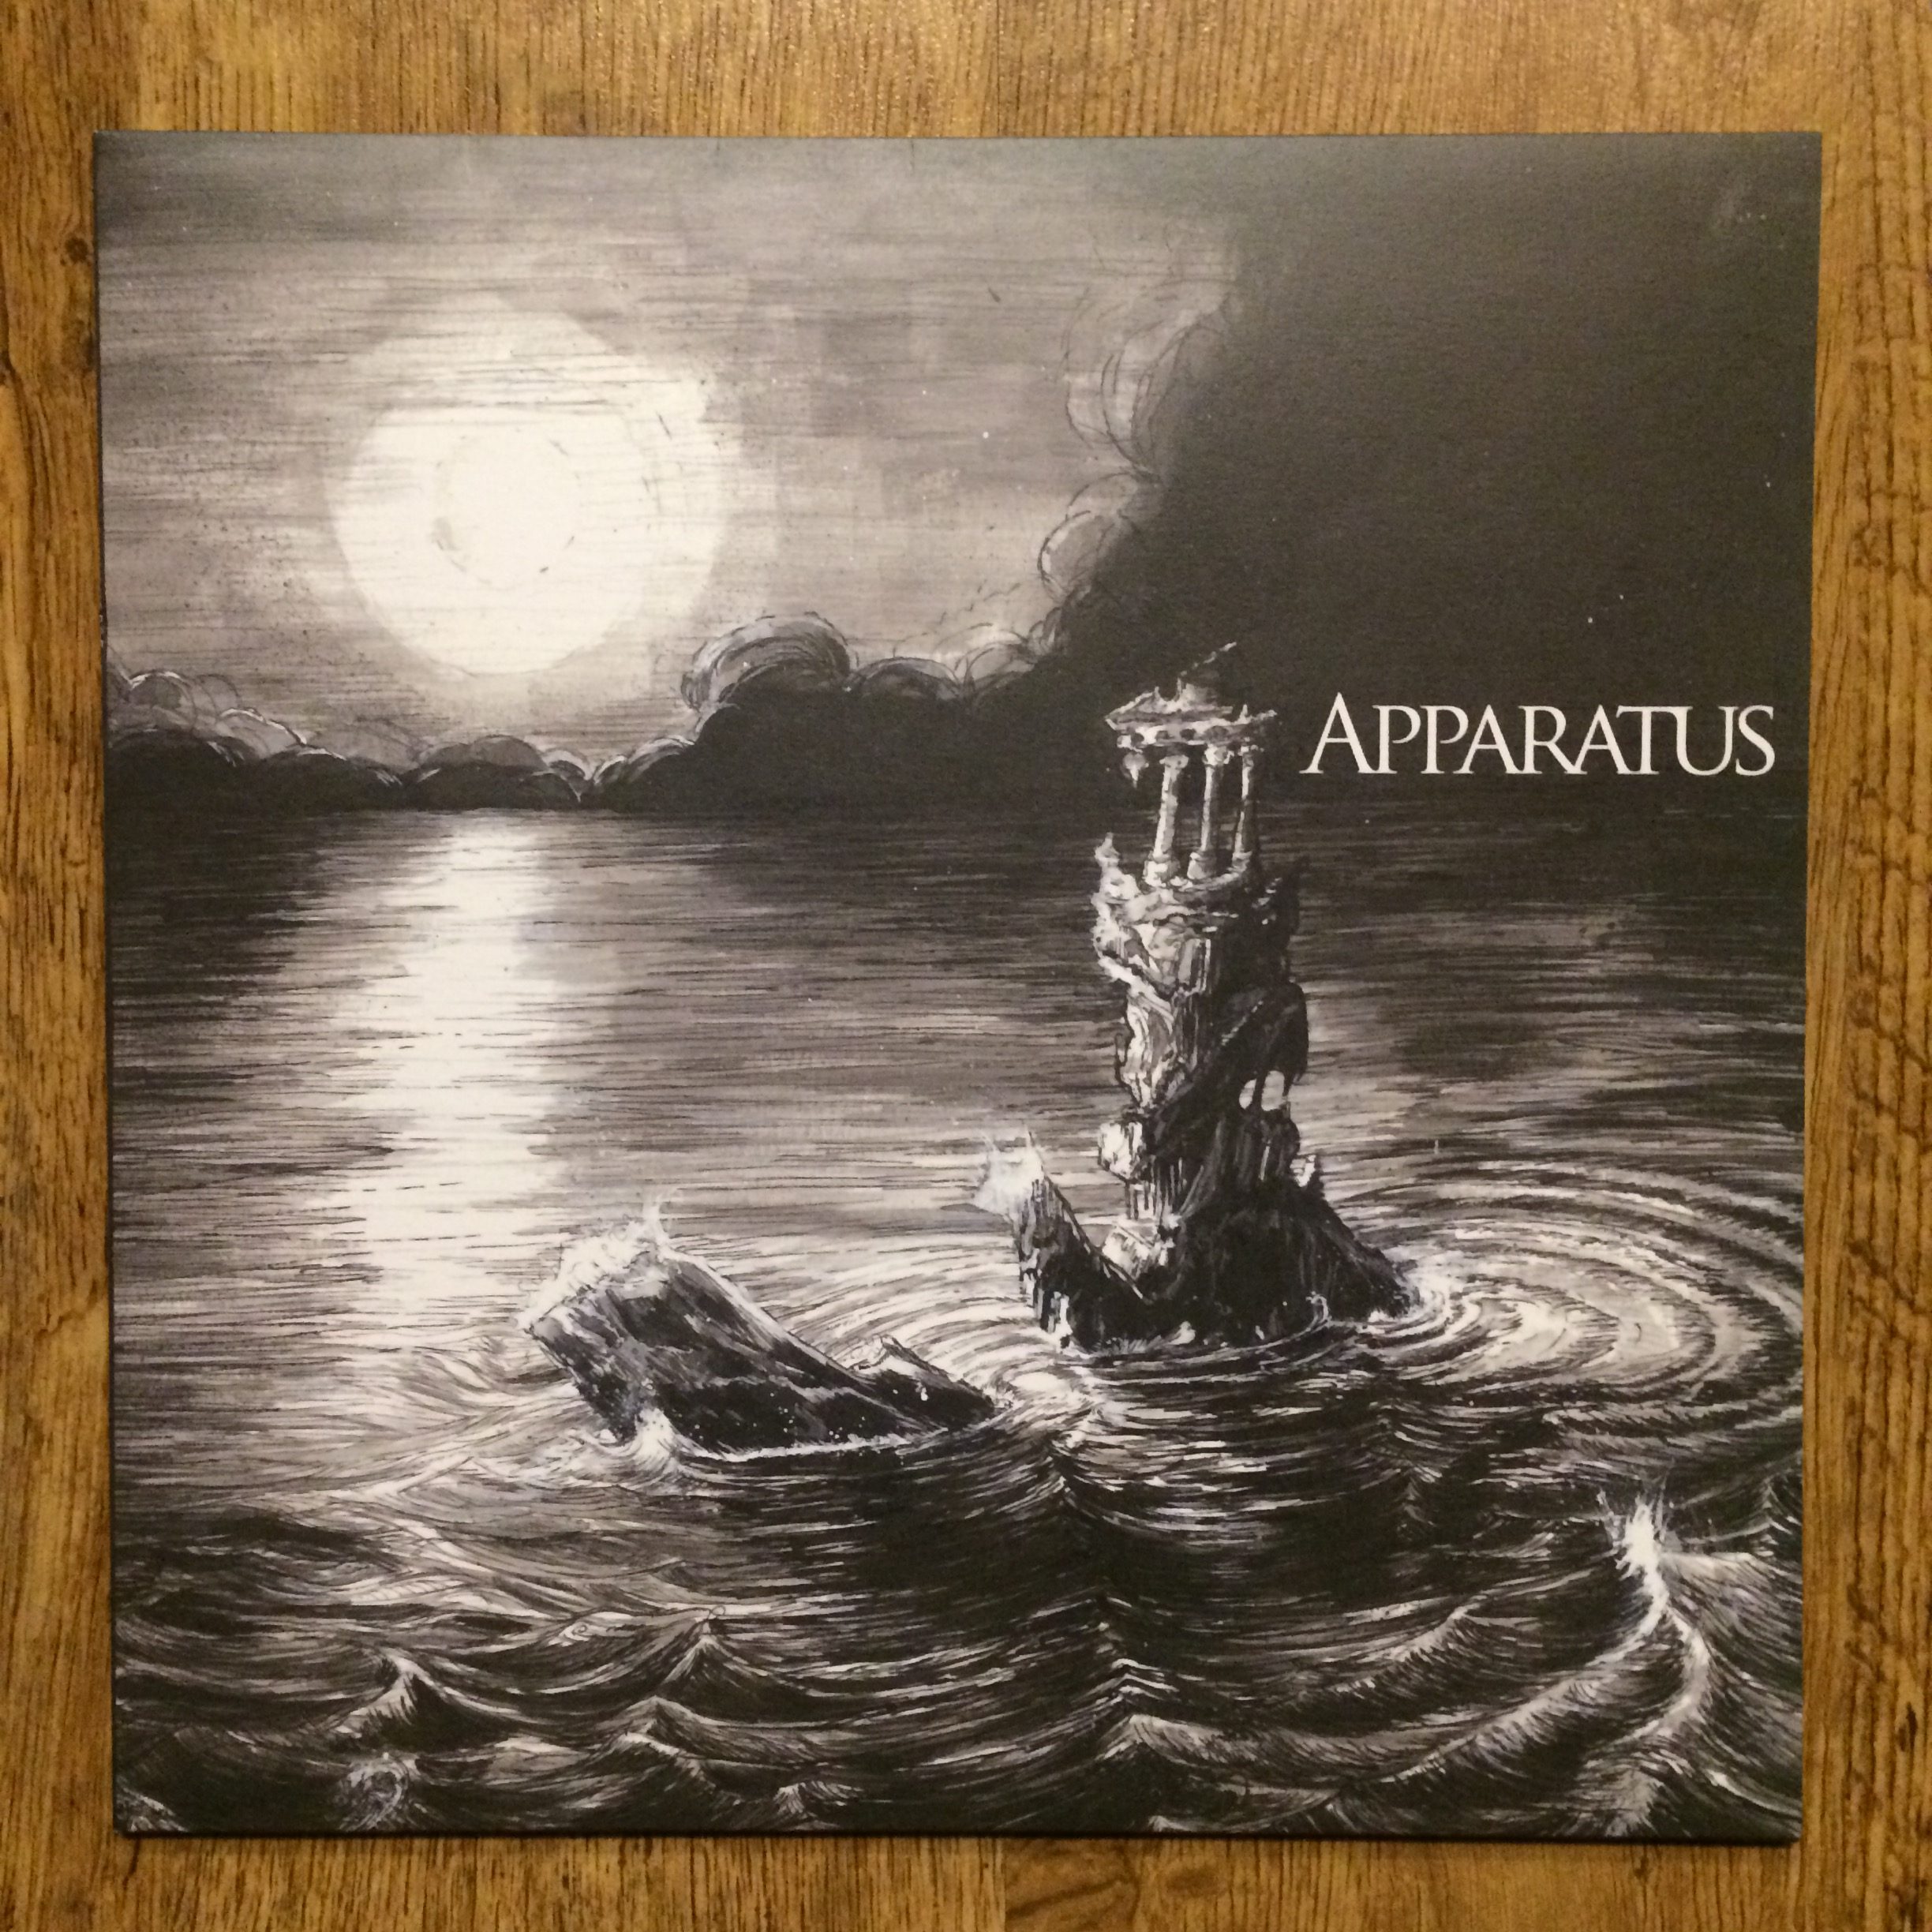 Photo of the Apparatus - "Yonder Yawns the Univers" LP (Black vinyl)